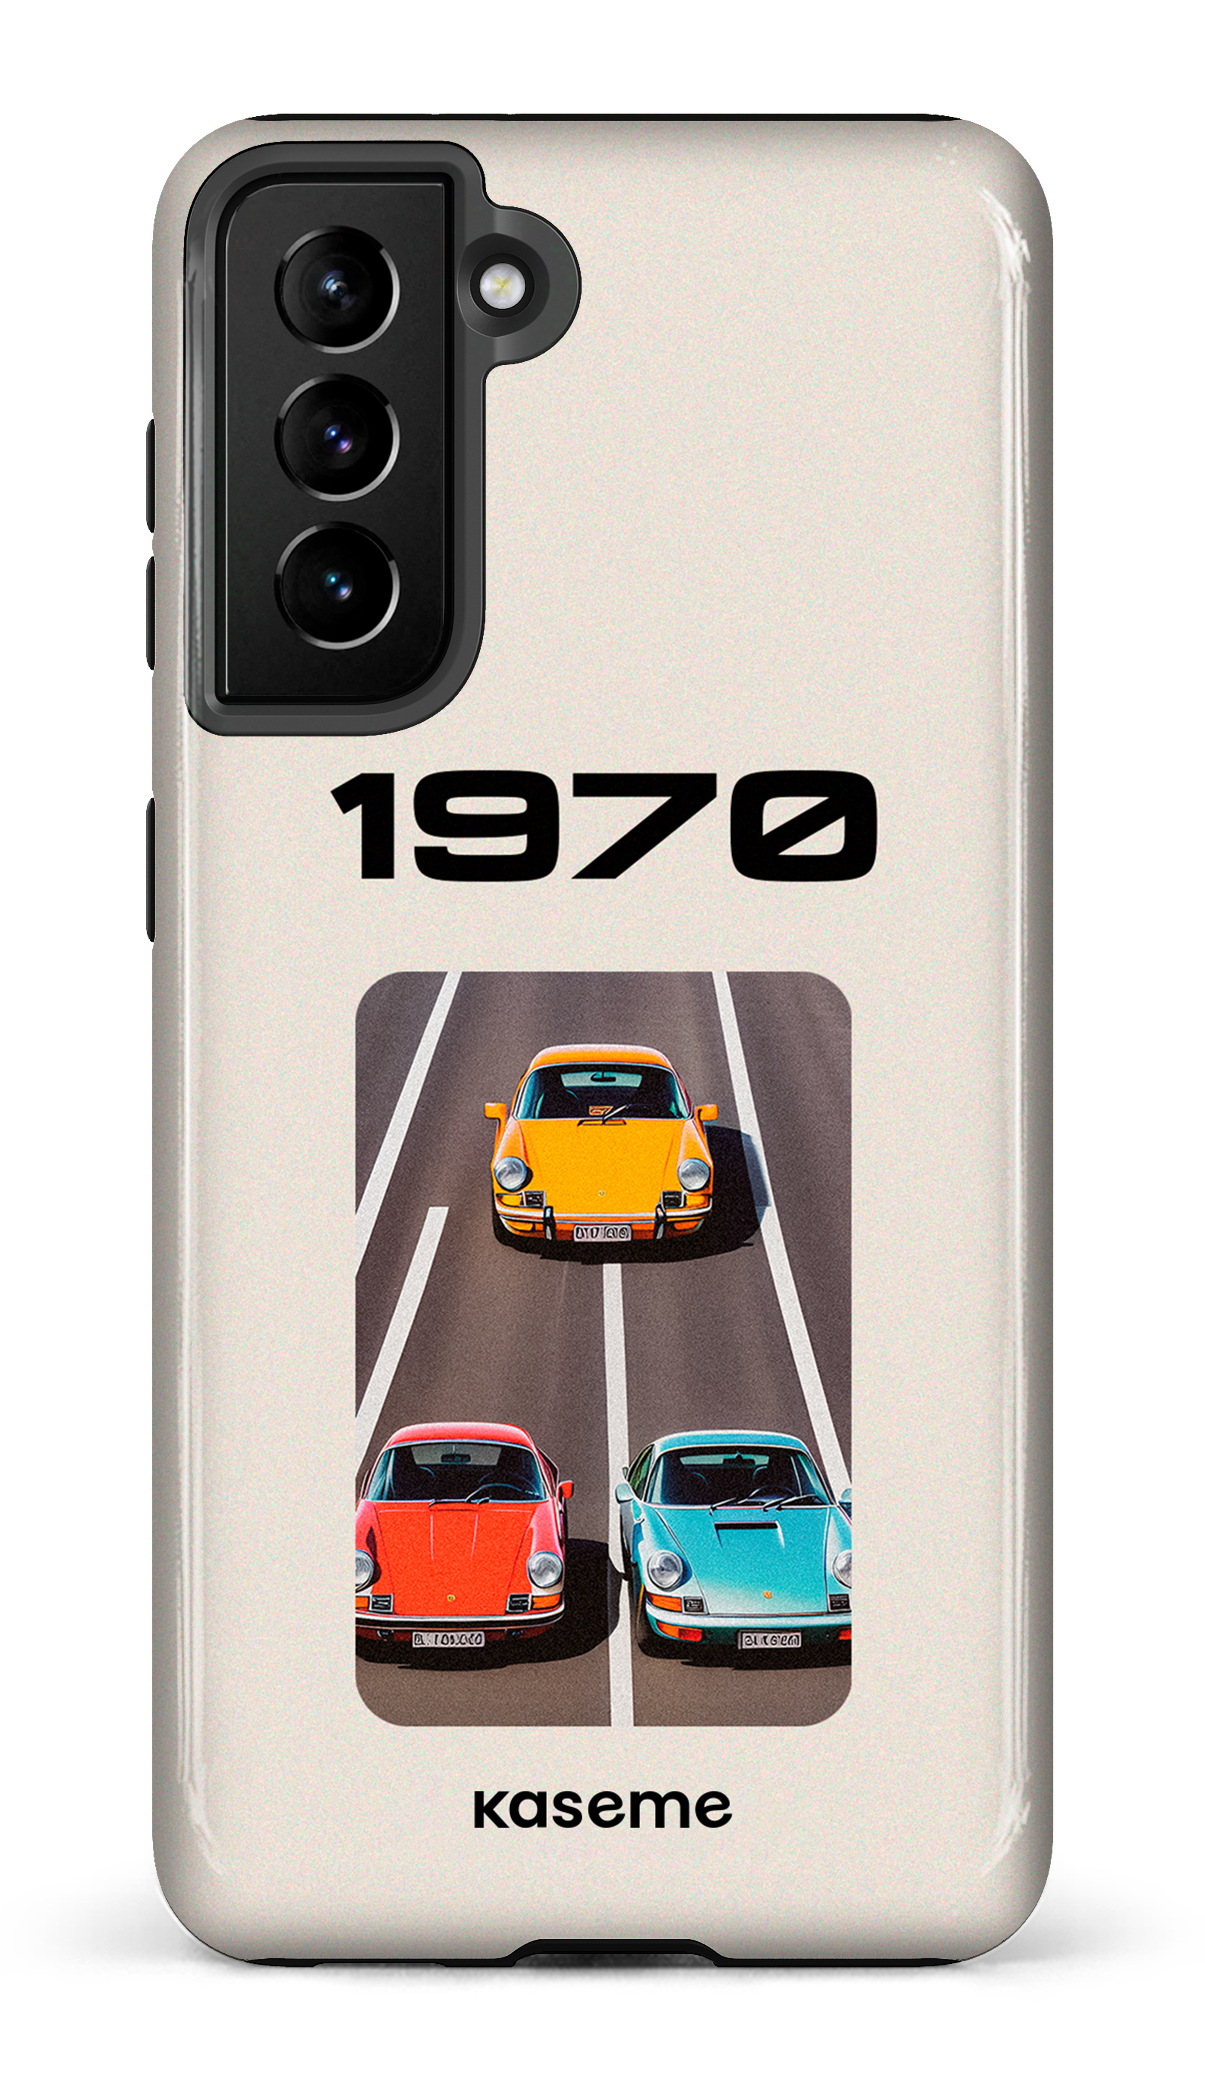 The 1970 - Galaxy S21